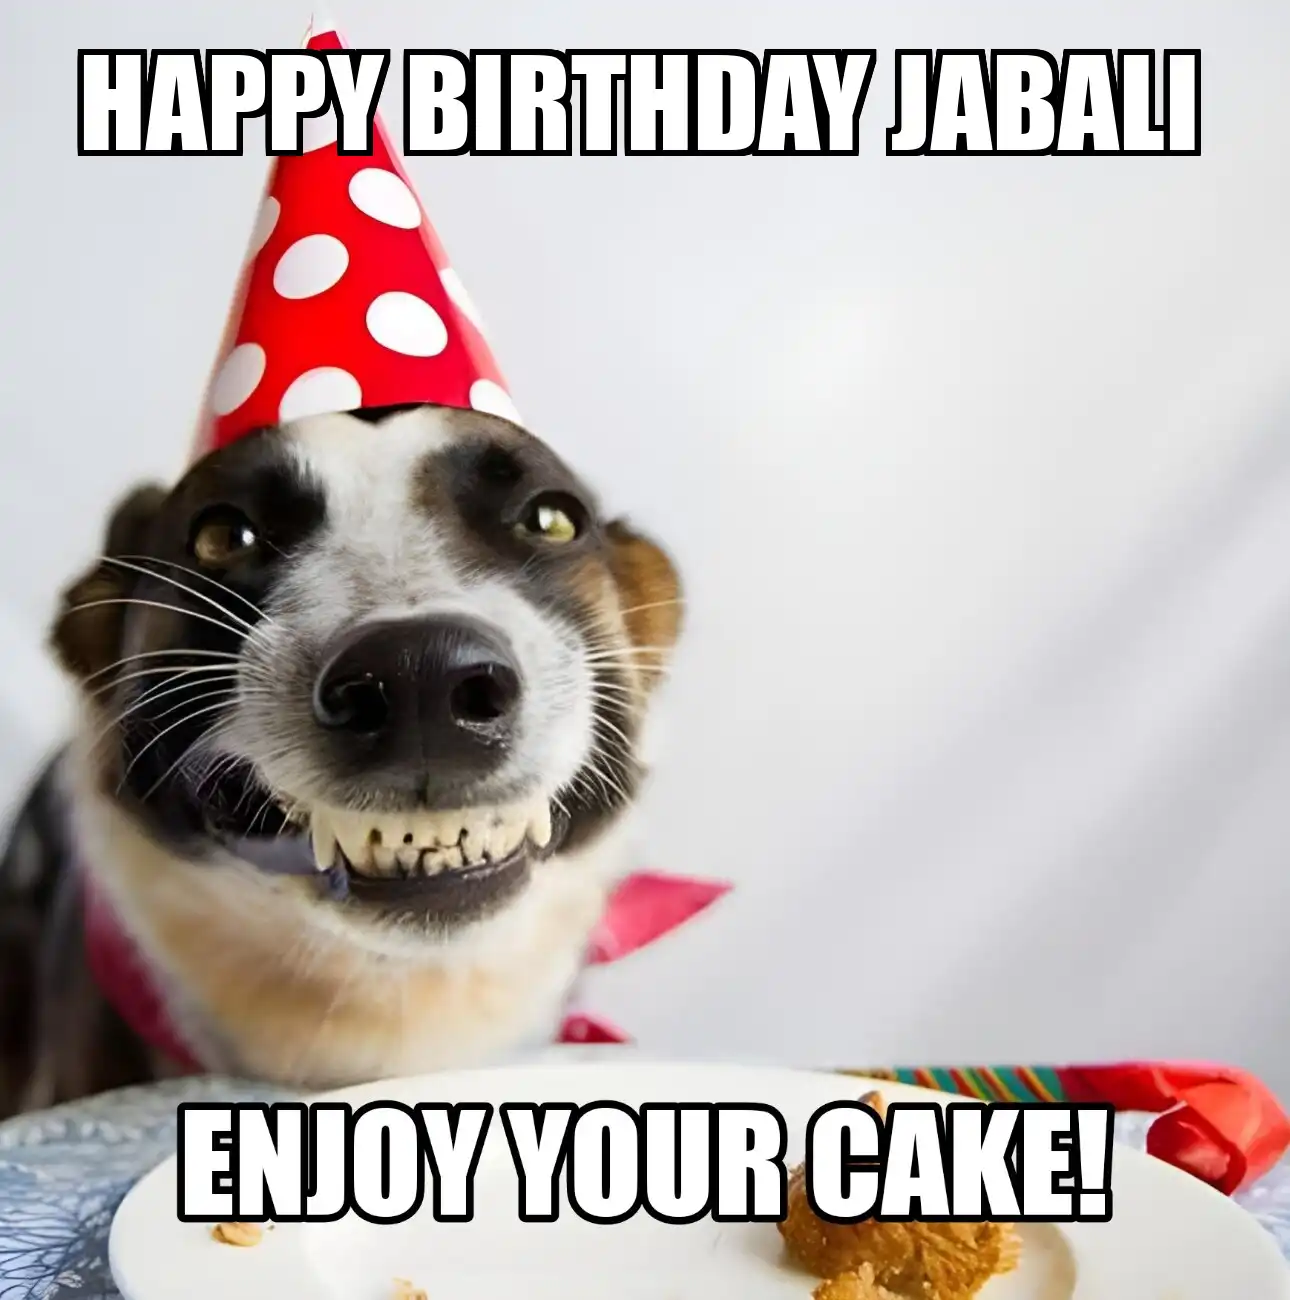 Happy Birthday Jabali Enjoy Your Cake Dog Meme